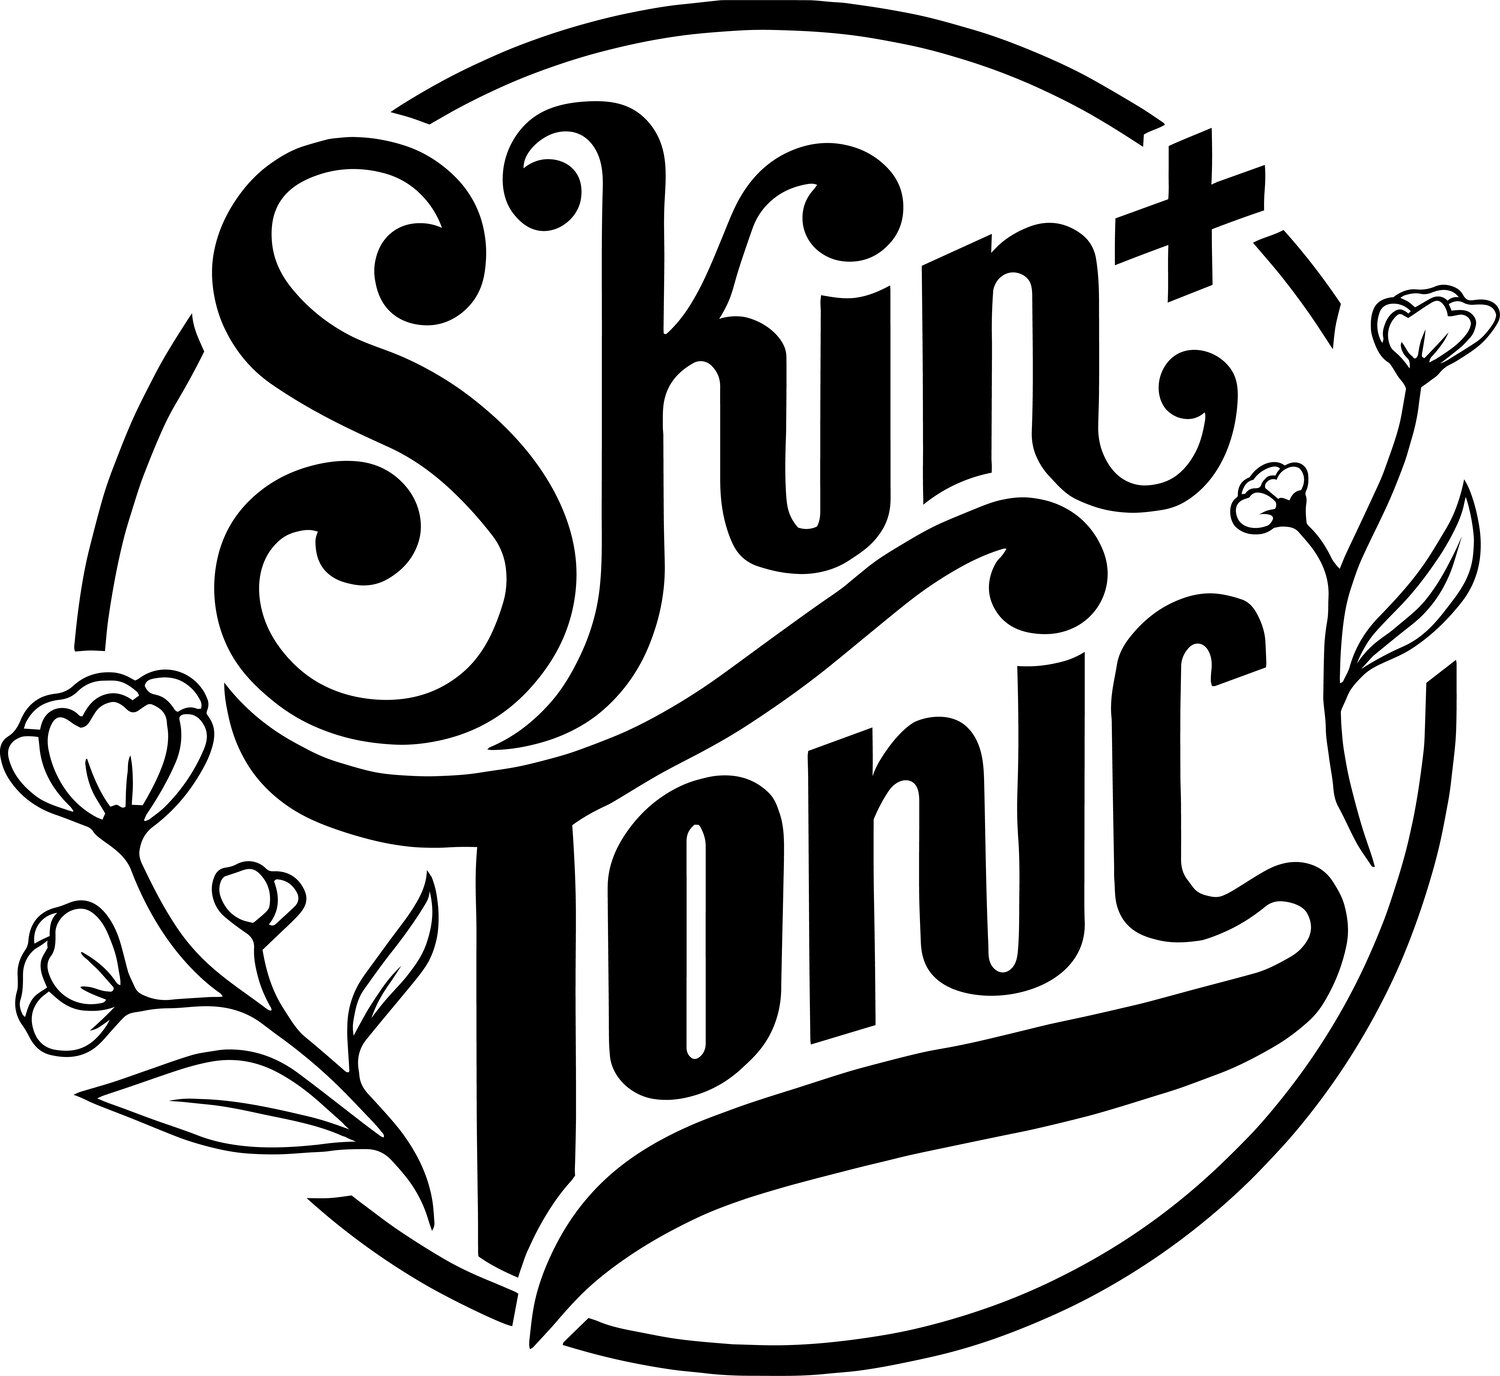 Skin and Tonic